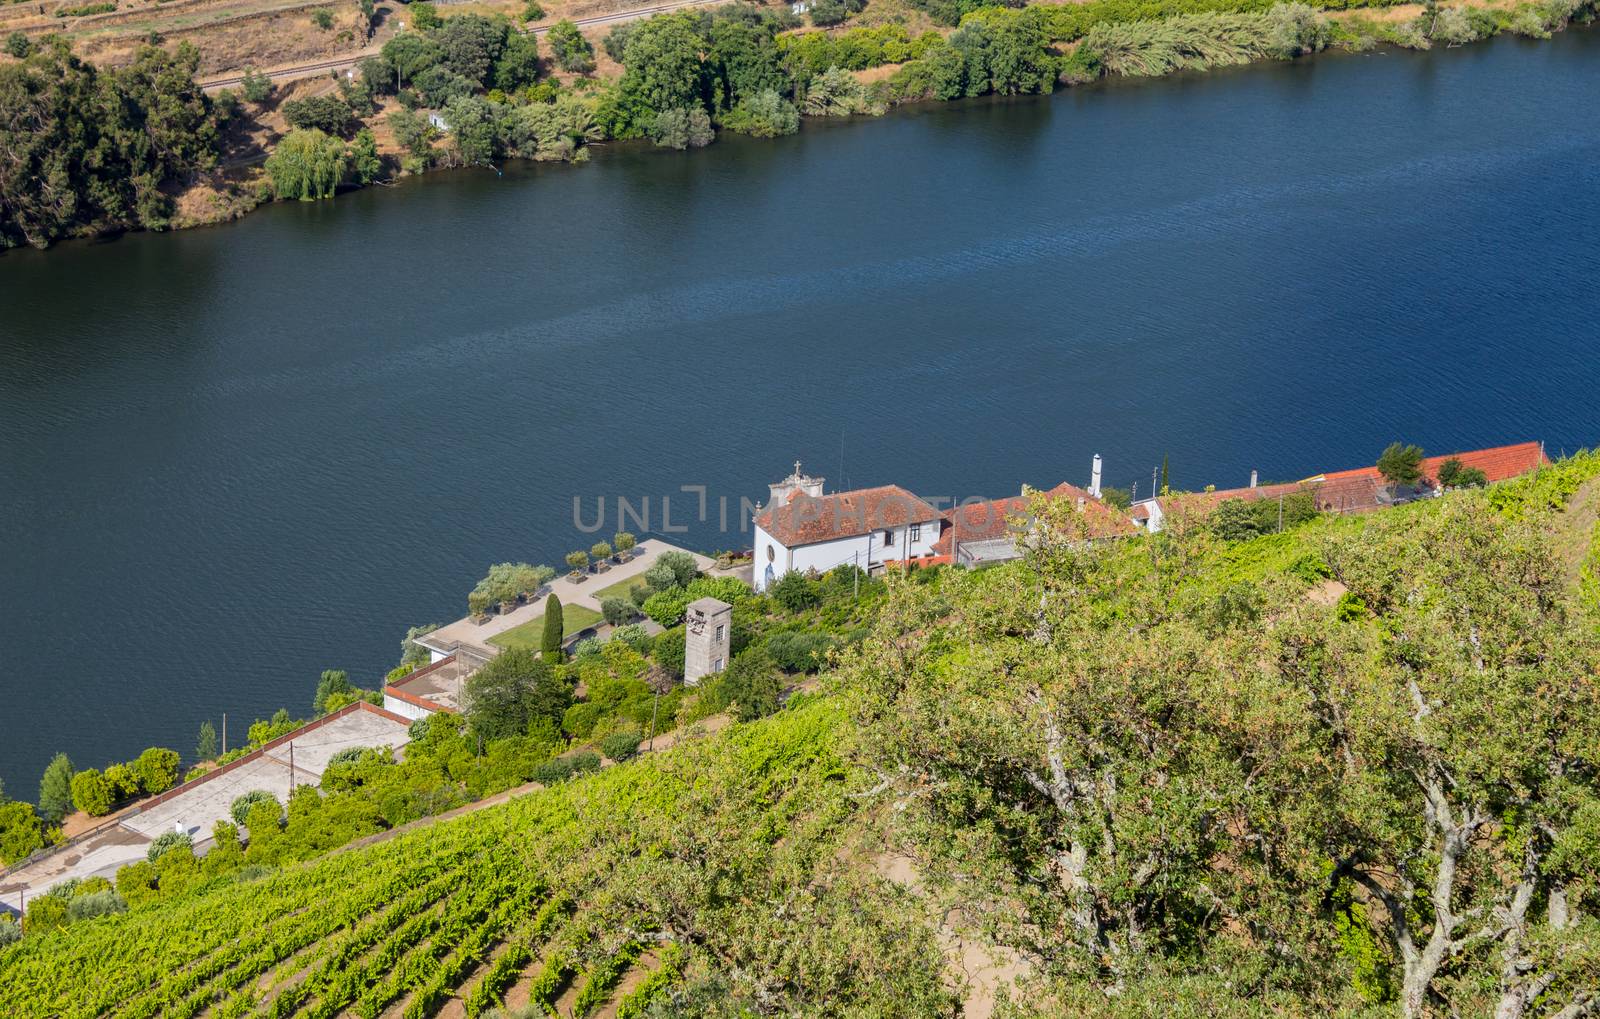 Douro Valley landscape by zittto